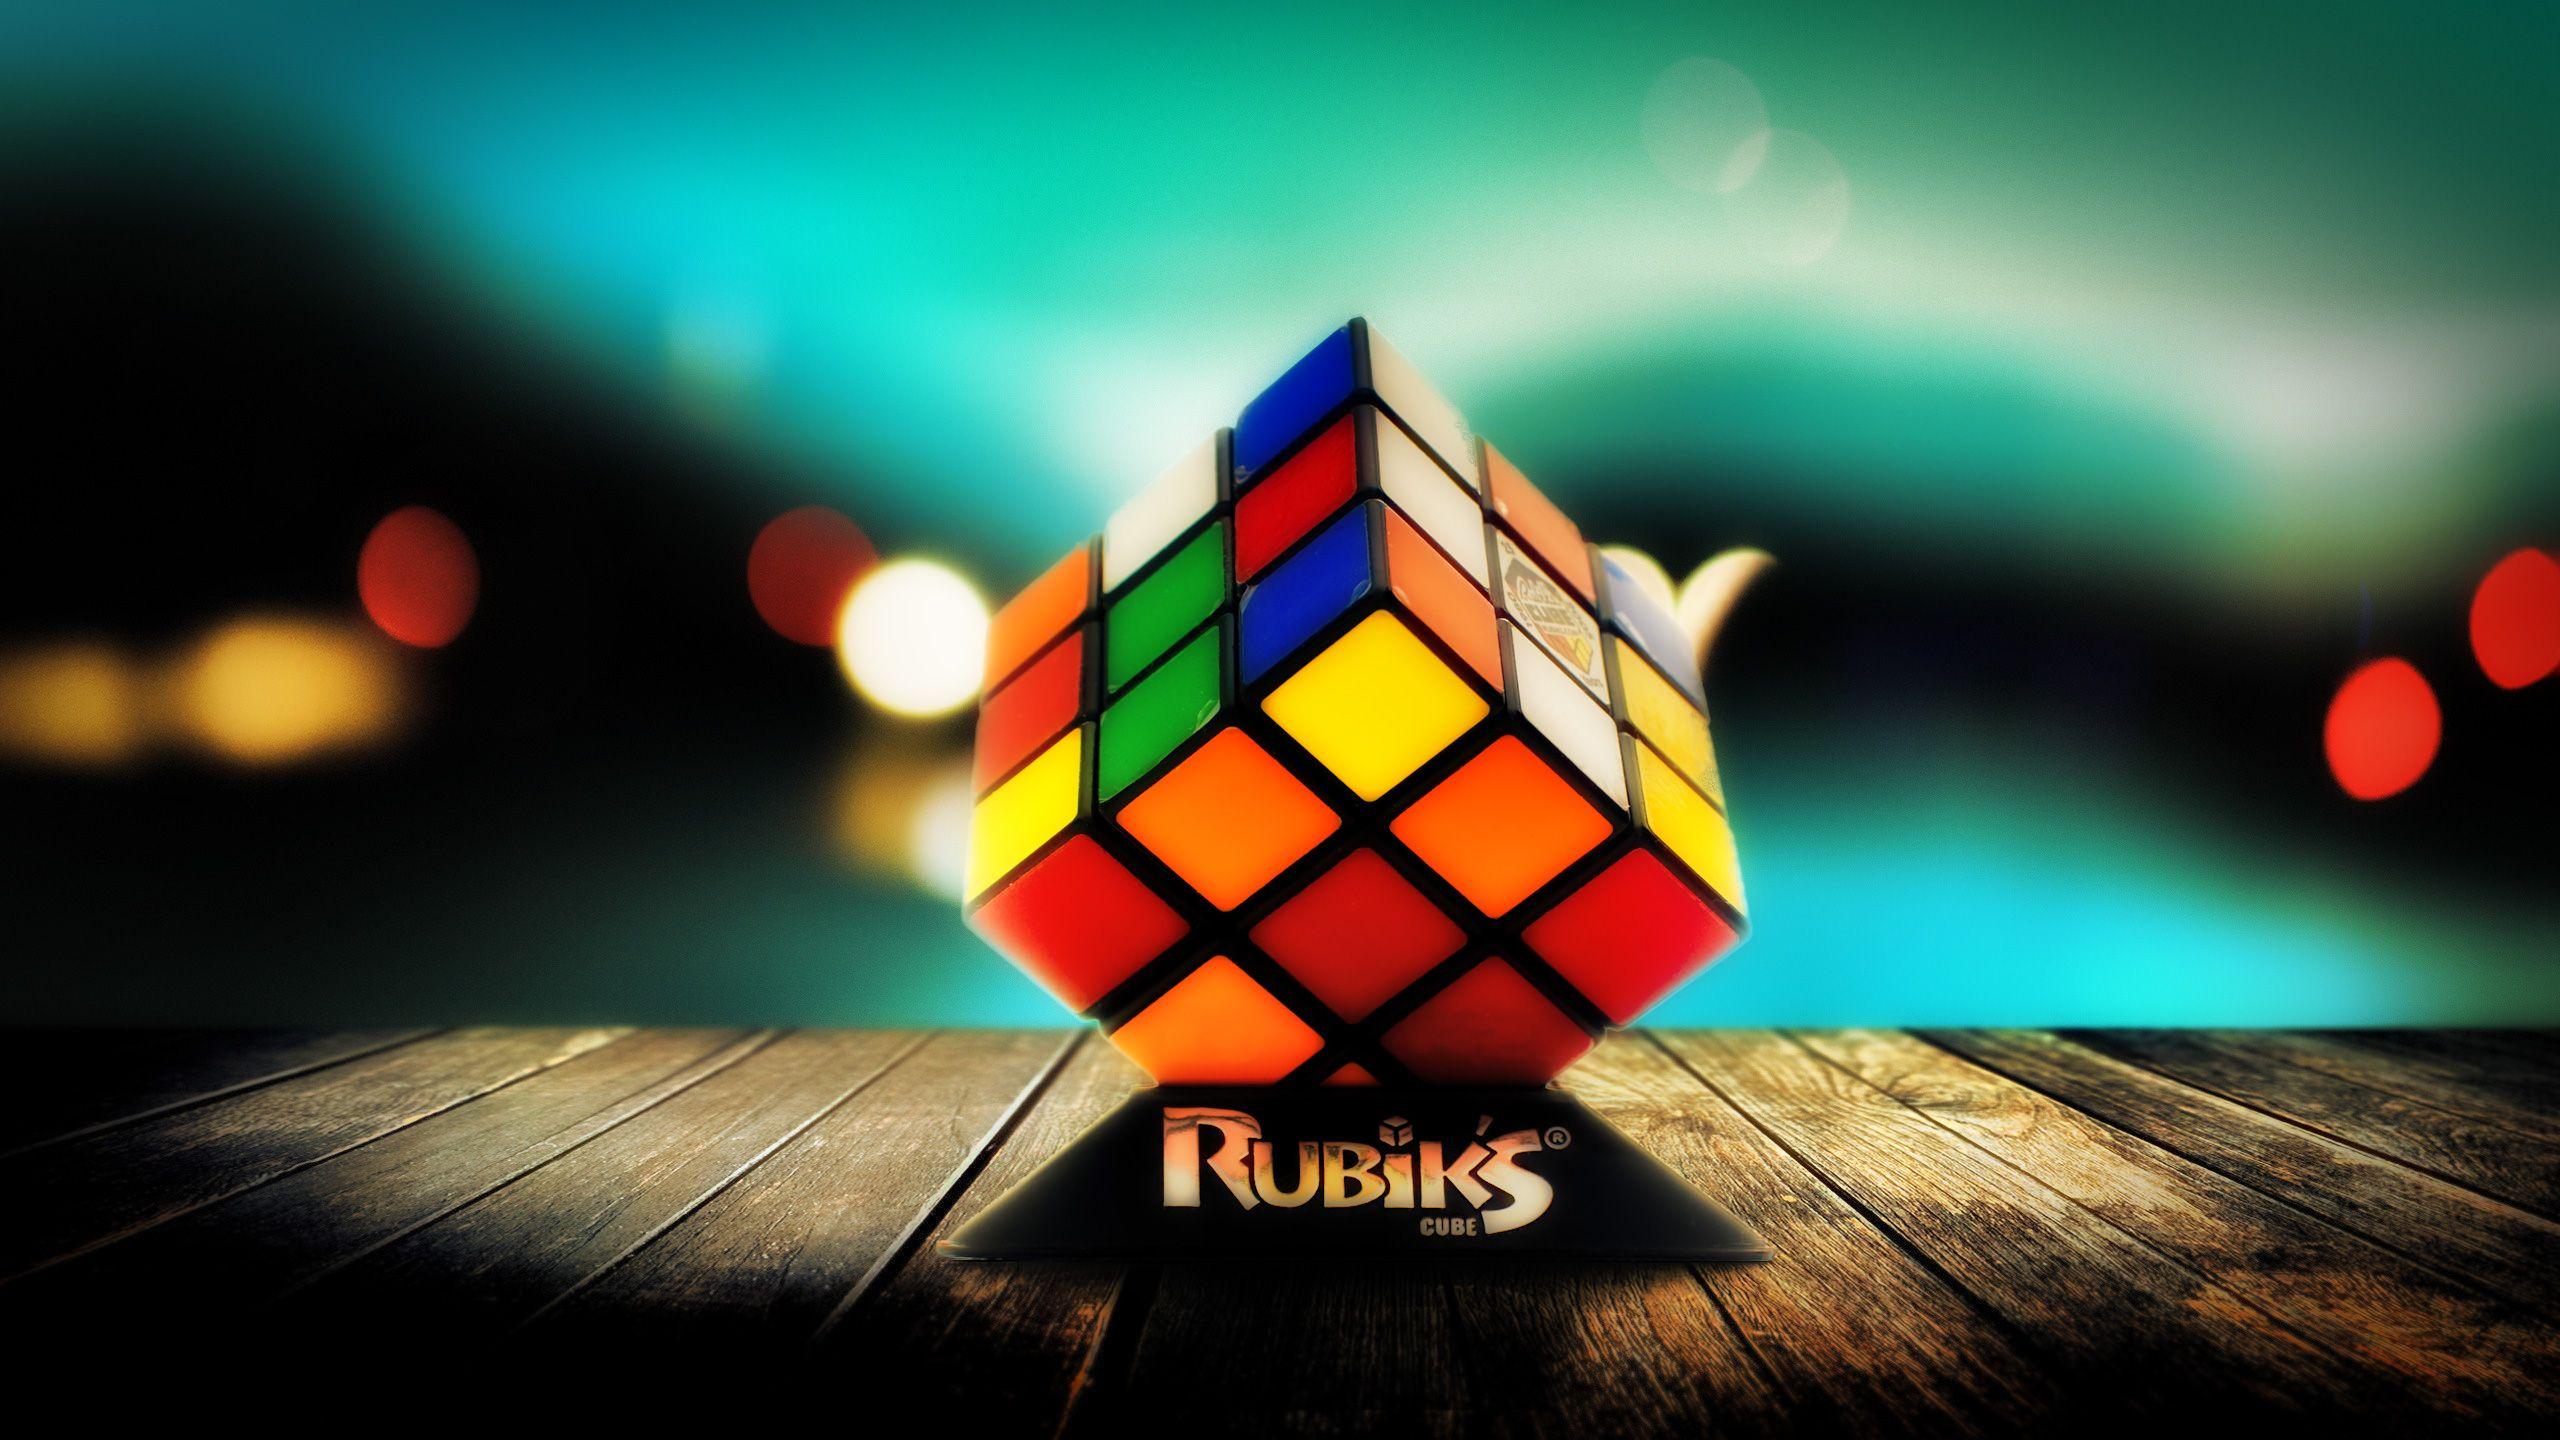 Rubiks Cube Wallpaper 2560x1440. Rubik's. Cubes, 42